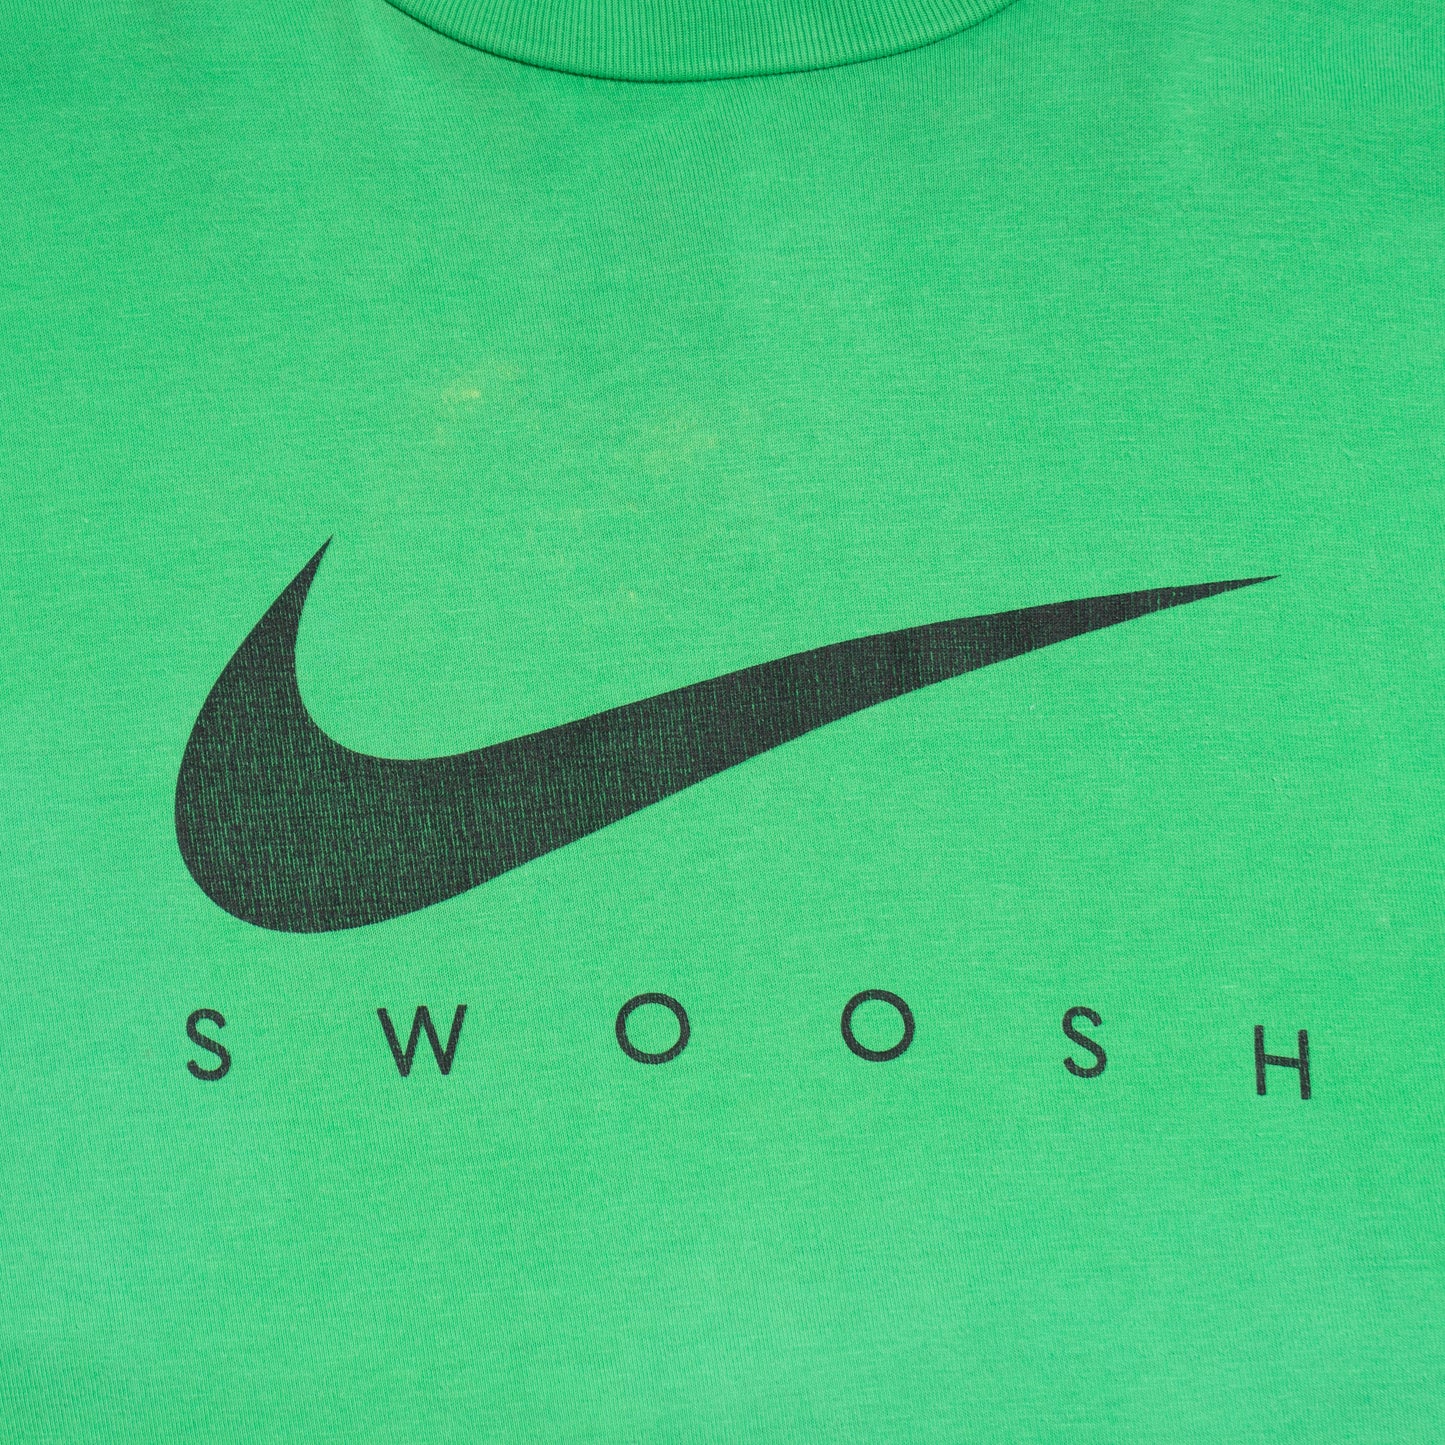 Nike Swoosh T Shirt, M